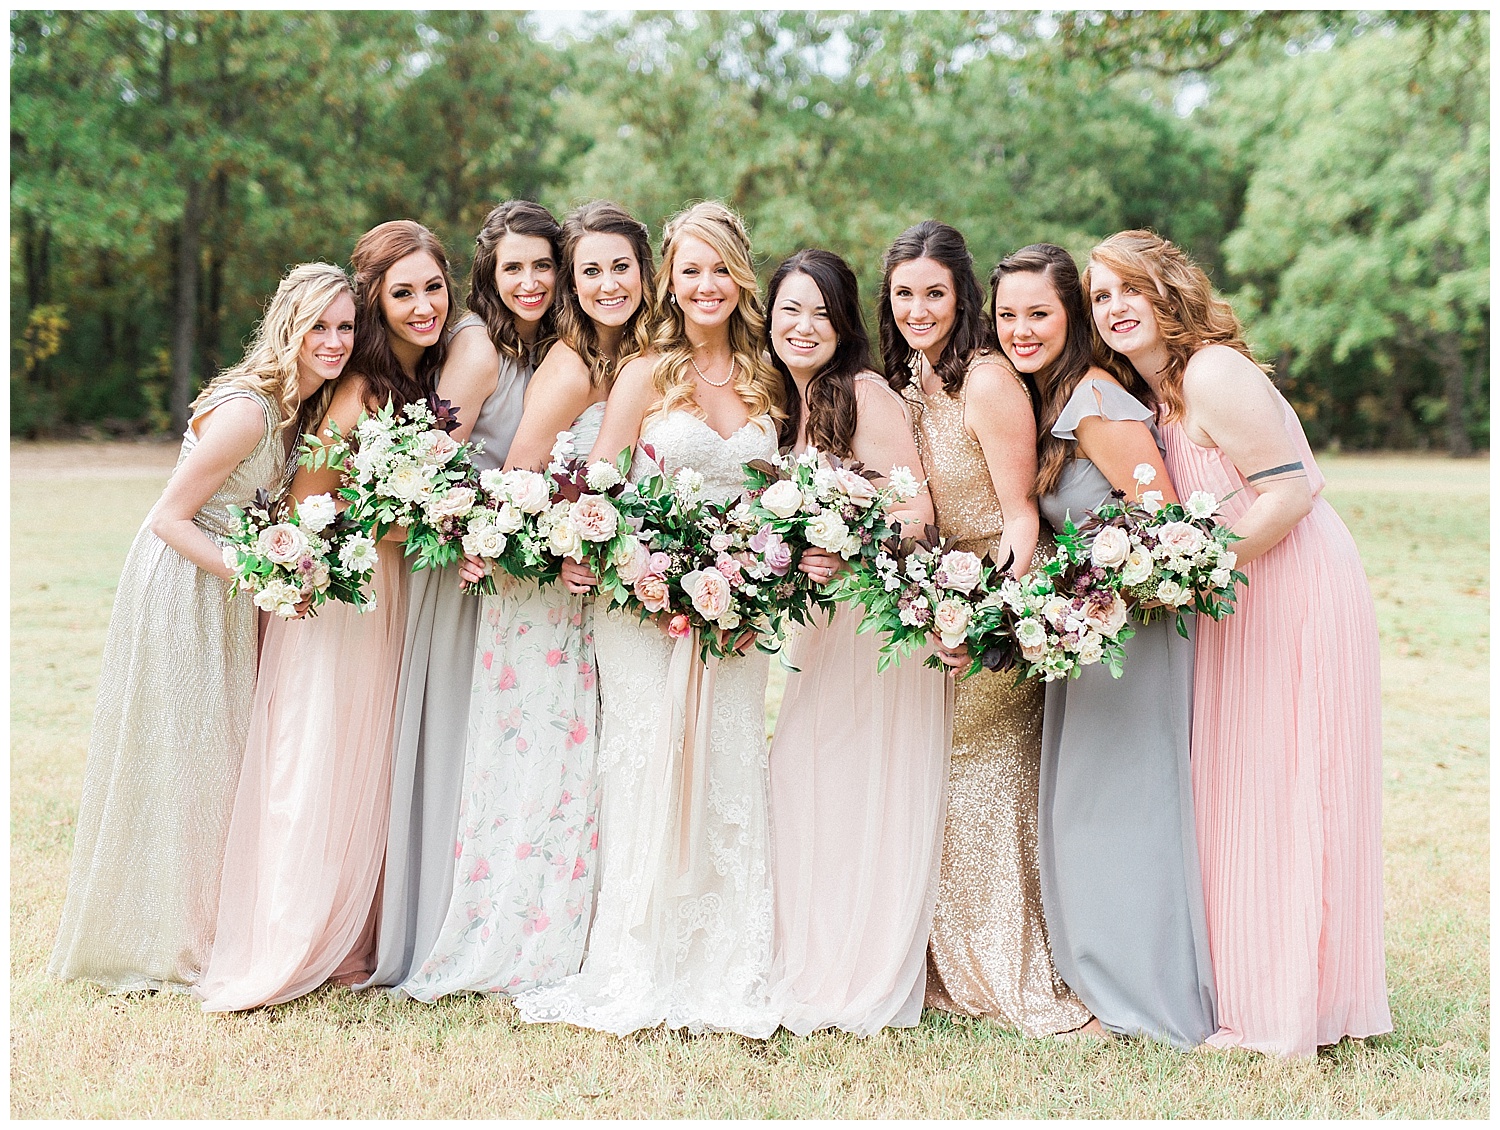 Texas Wedding Venue | The White Sparrow: Spring Wedding Trends